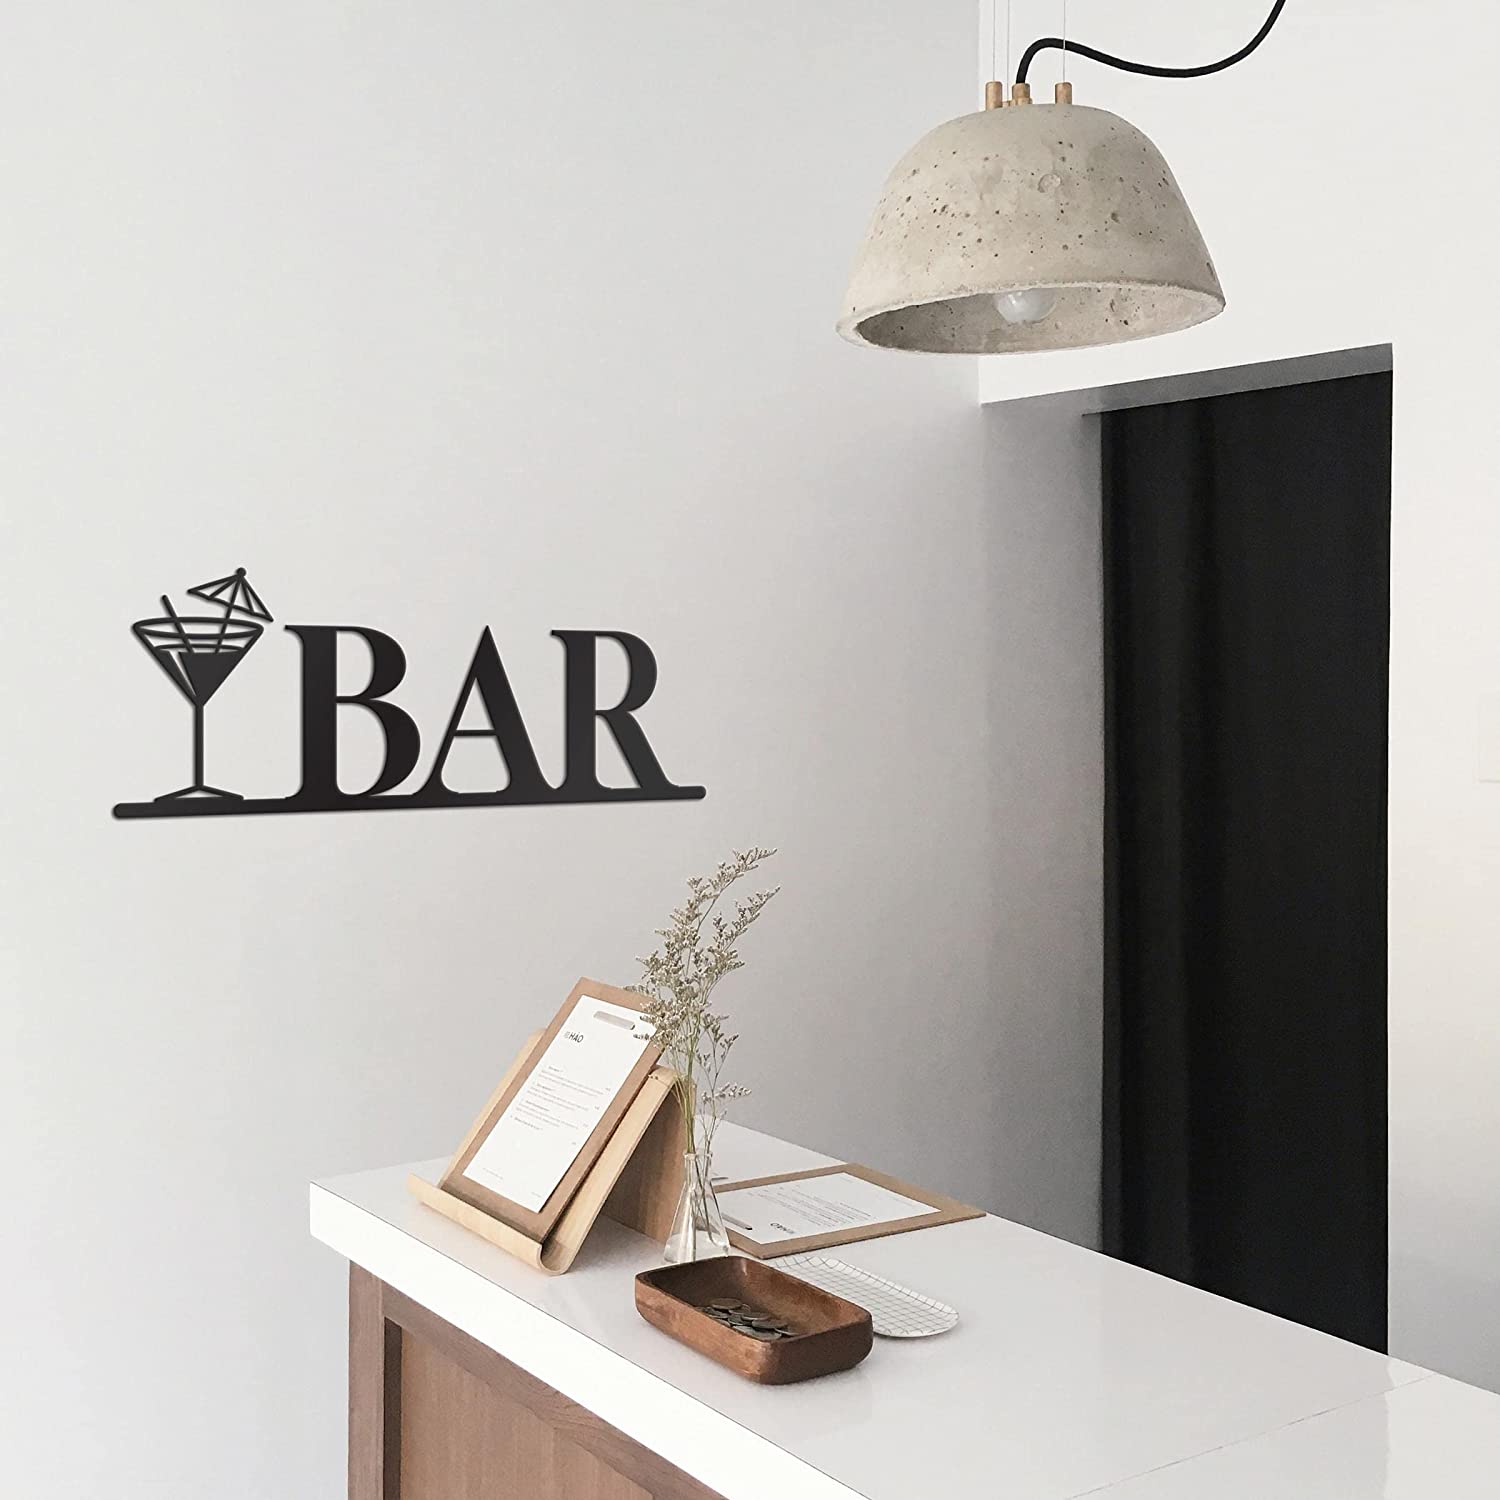 Home Bar Signs Metal Bar Wall Decor - 18"x7" Black Bar Letters Modern Fashion Bar Decorations For The Home Bar Set Bar Decor For Home Bar Decor